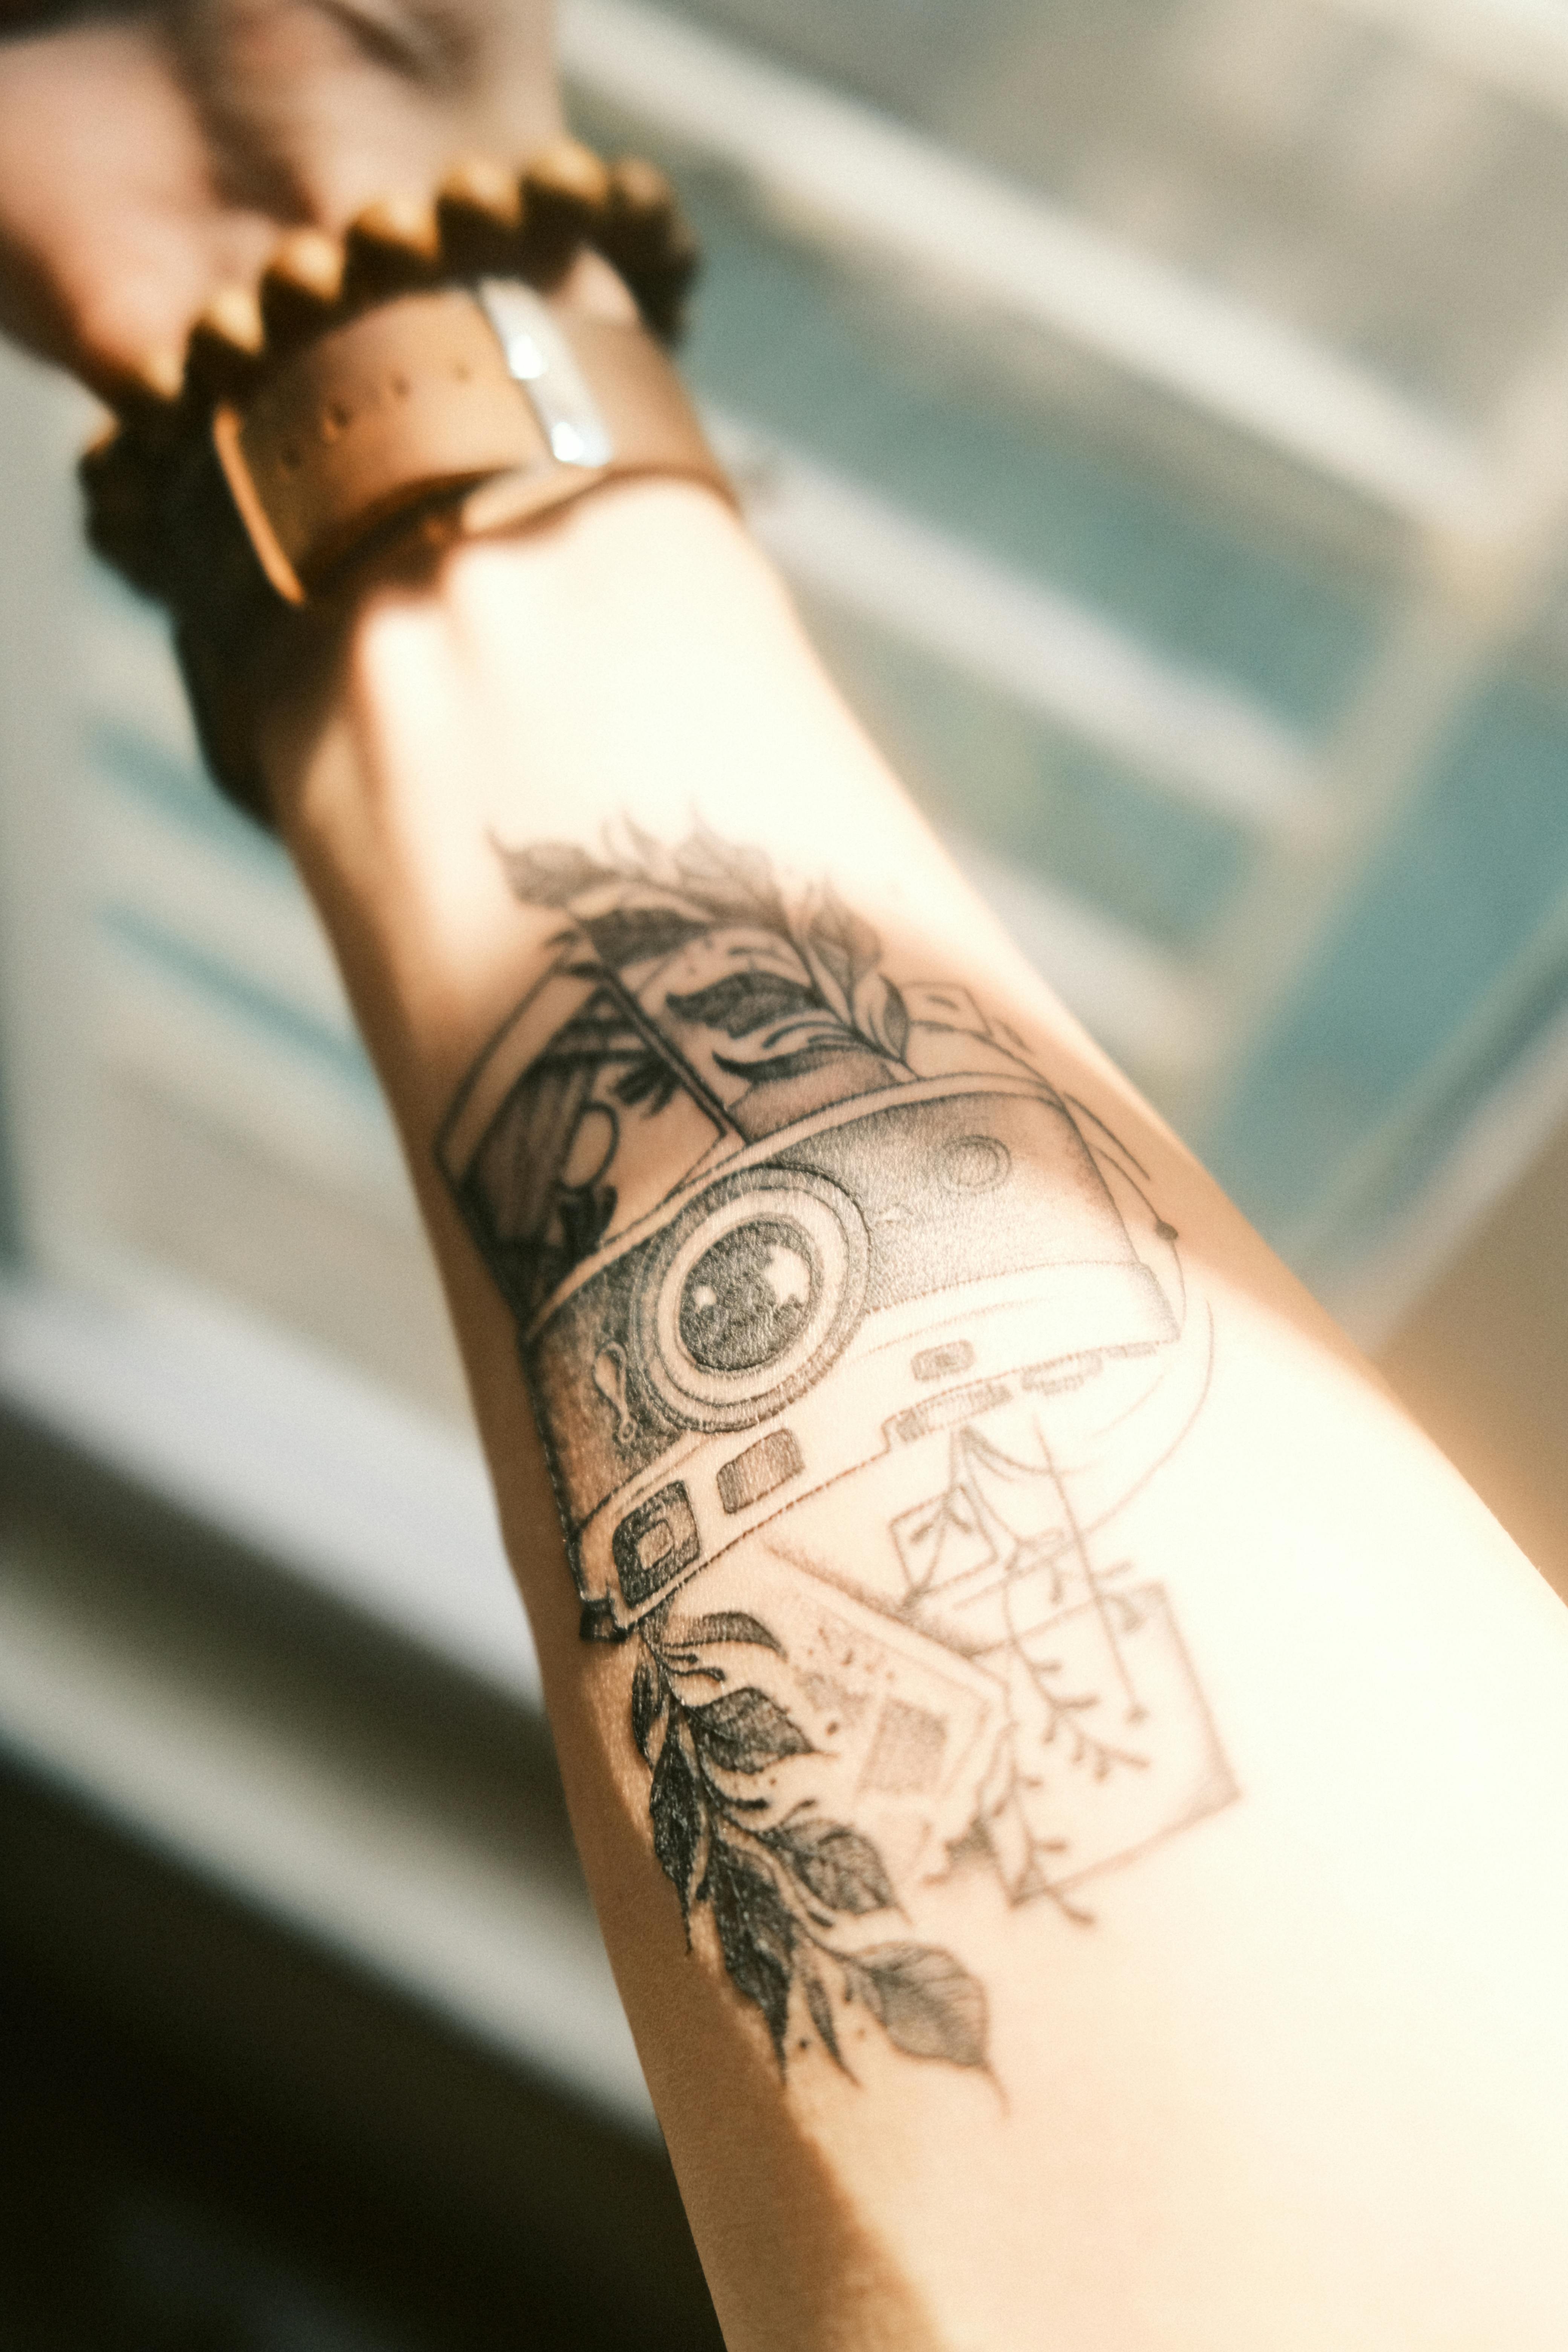 Pin by KB⋆ on TATTOO'S | Chrome hearts jewelry, Tattoos, Hand tattoos